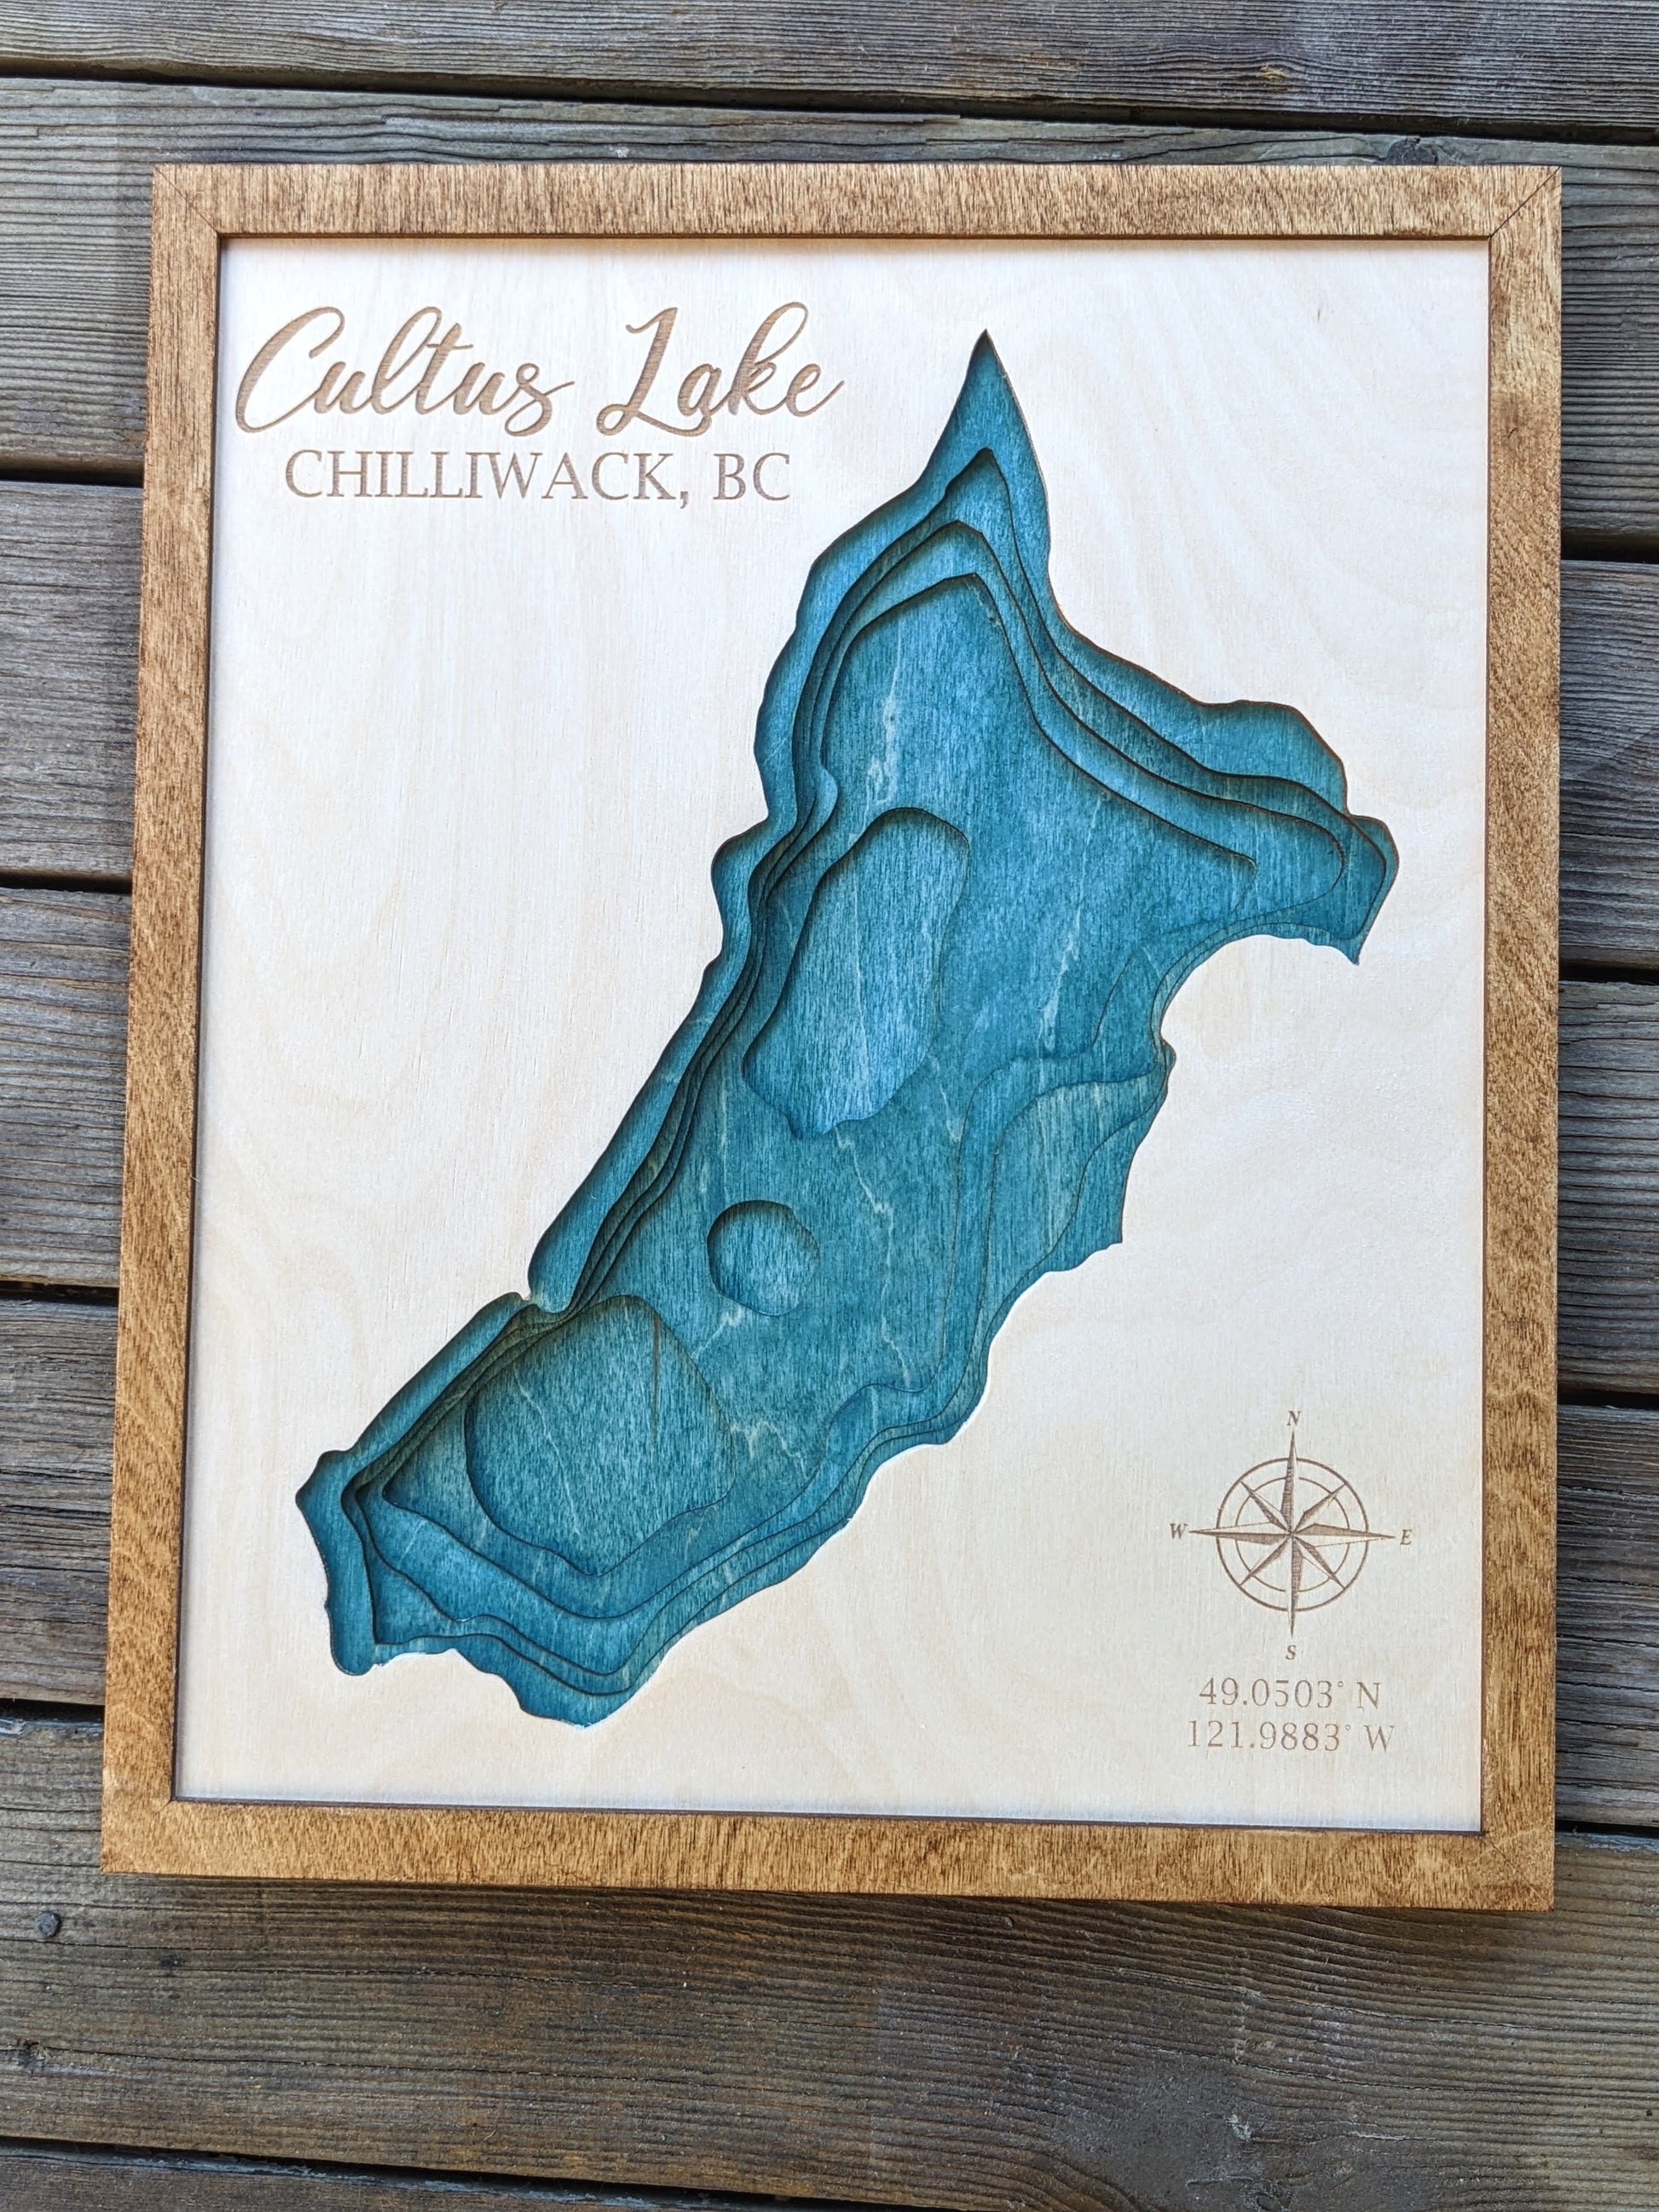 Cultus Lake Wooden Bathymetric Map Map 120.00